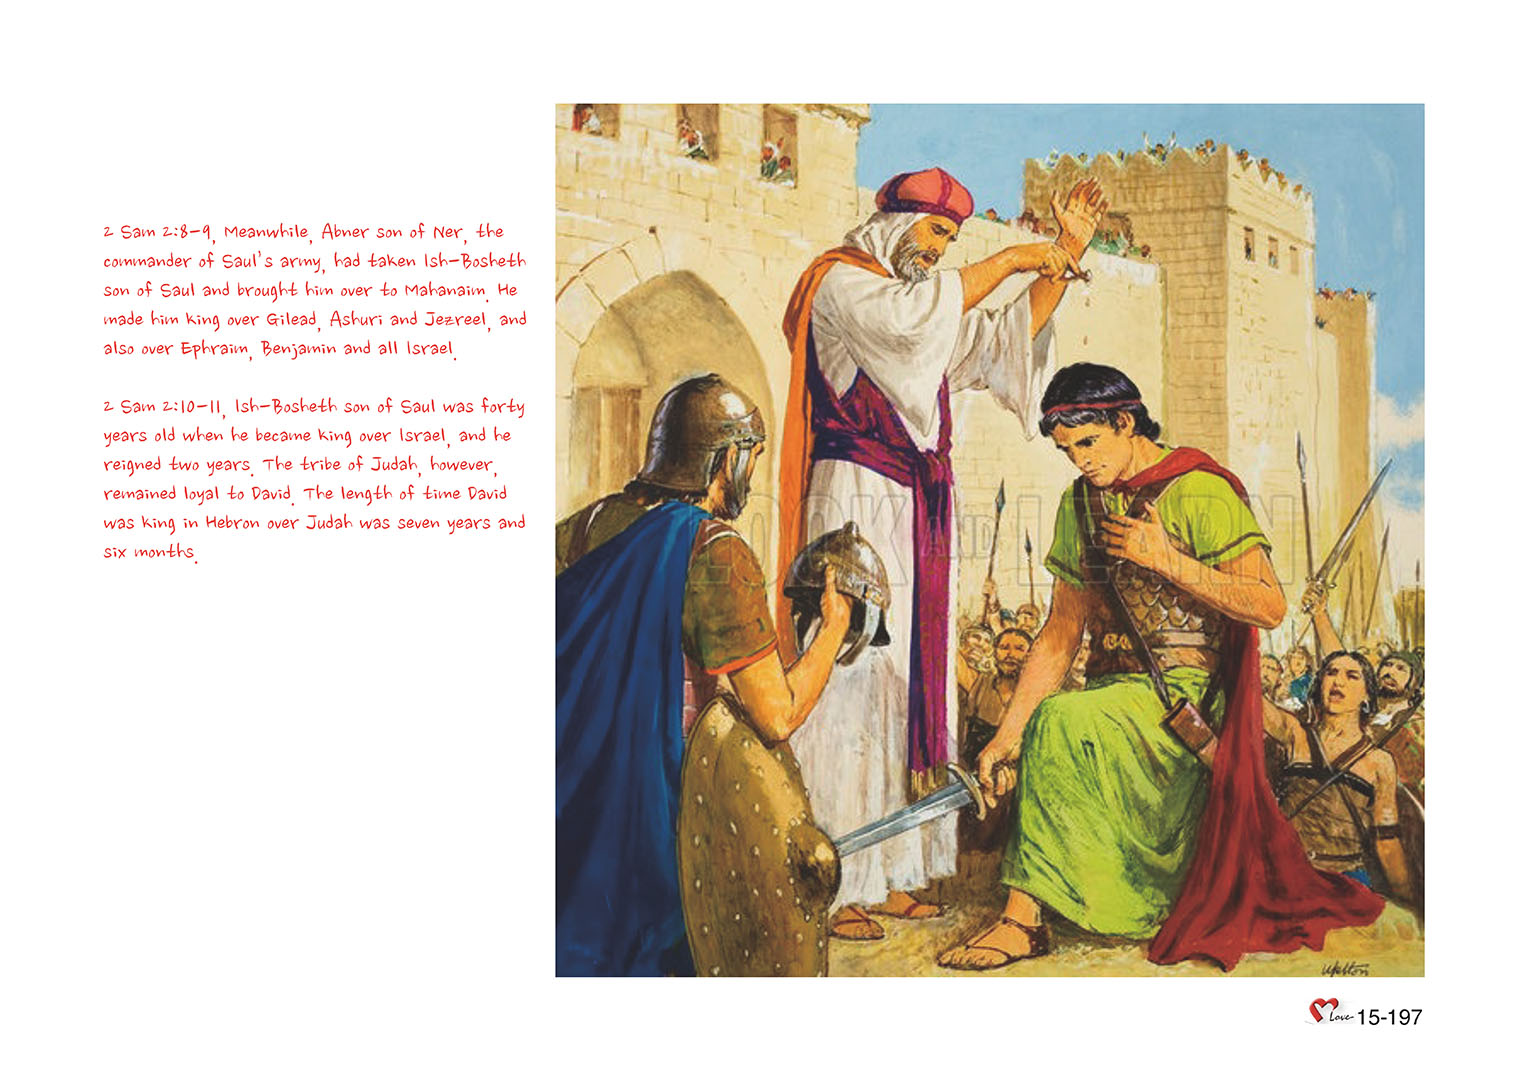 Chapter 15 - Lesson 47 - David became King